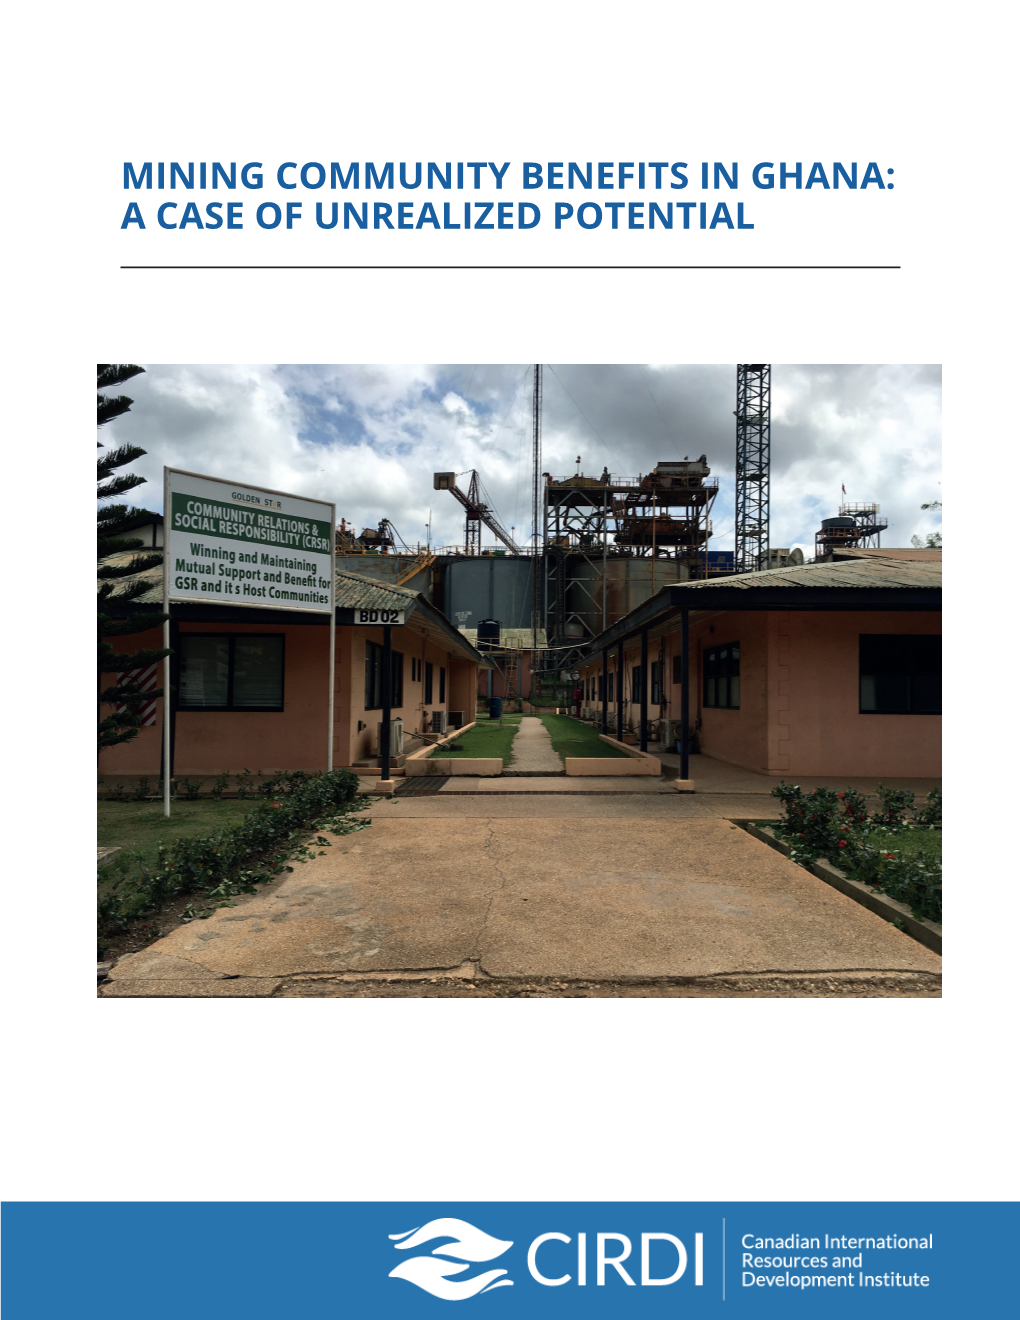 Mining Community Benefits in Ghana